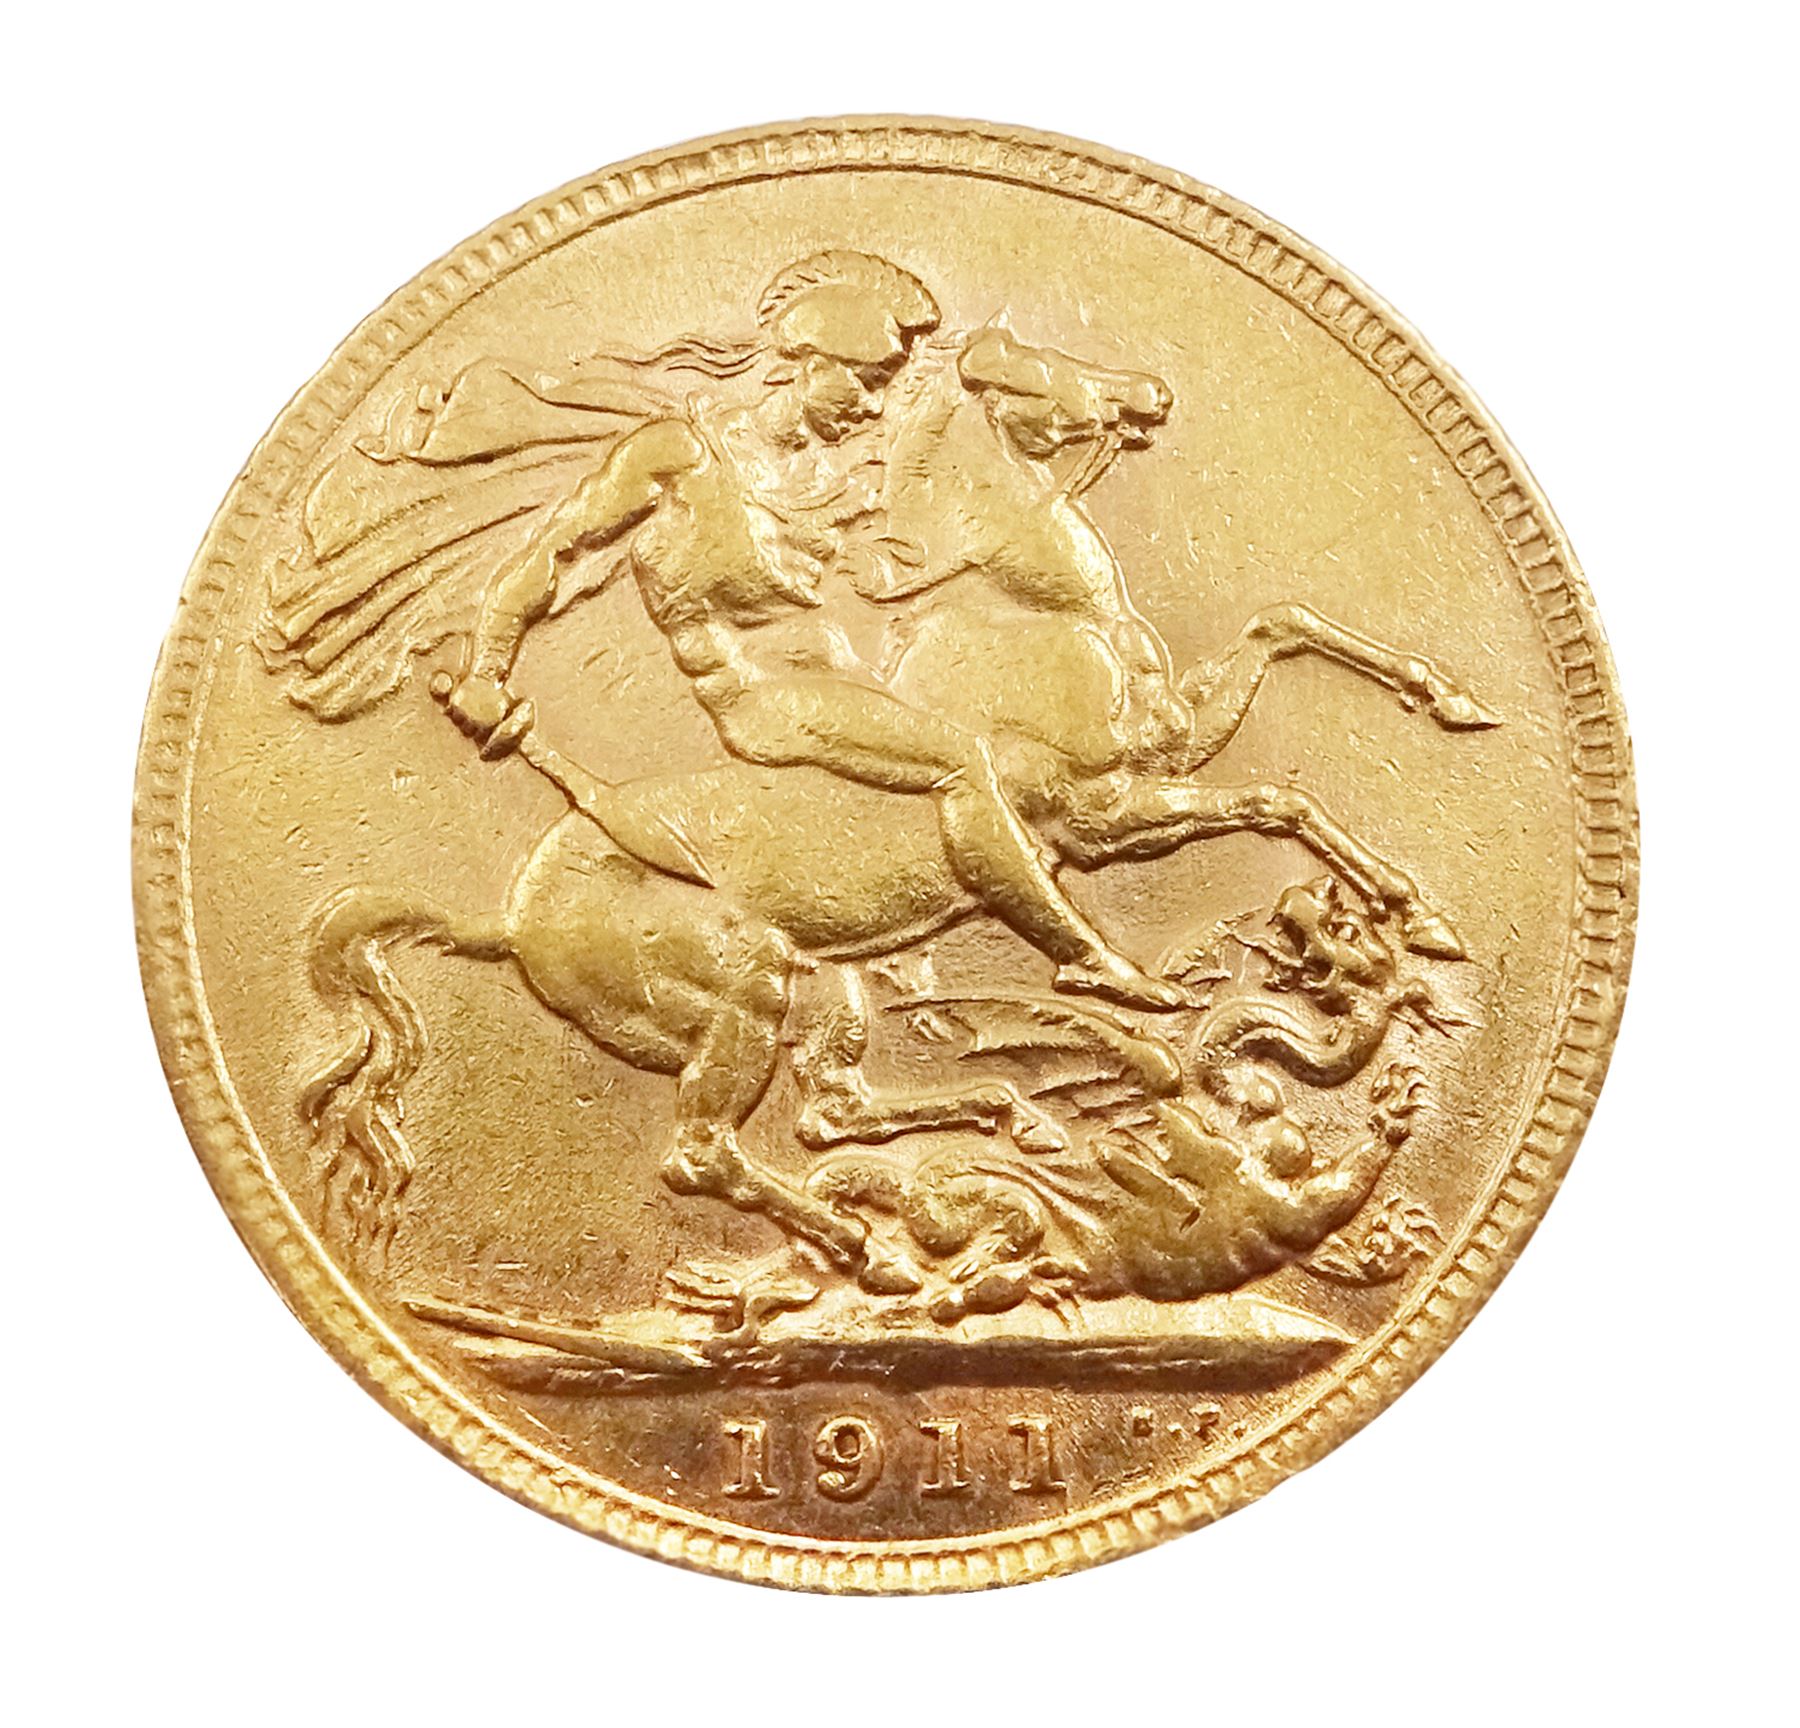 King George V 1911 gold full sovereign coin - Image 2 of 2